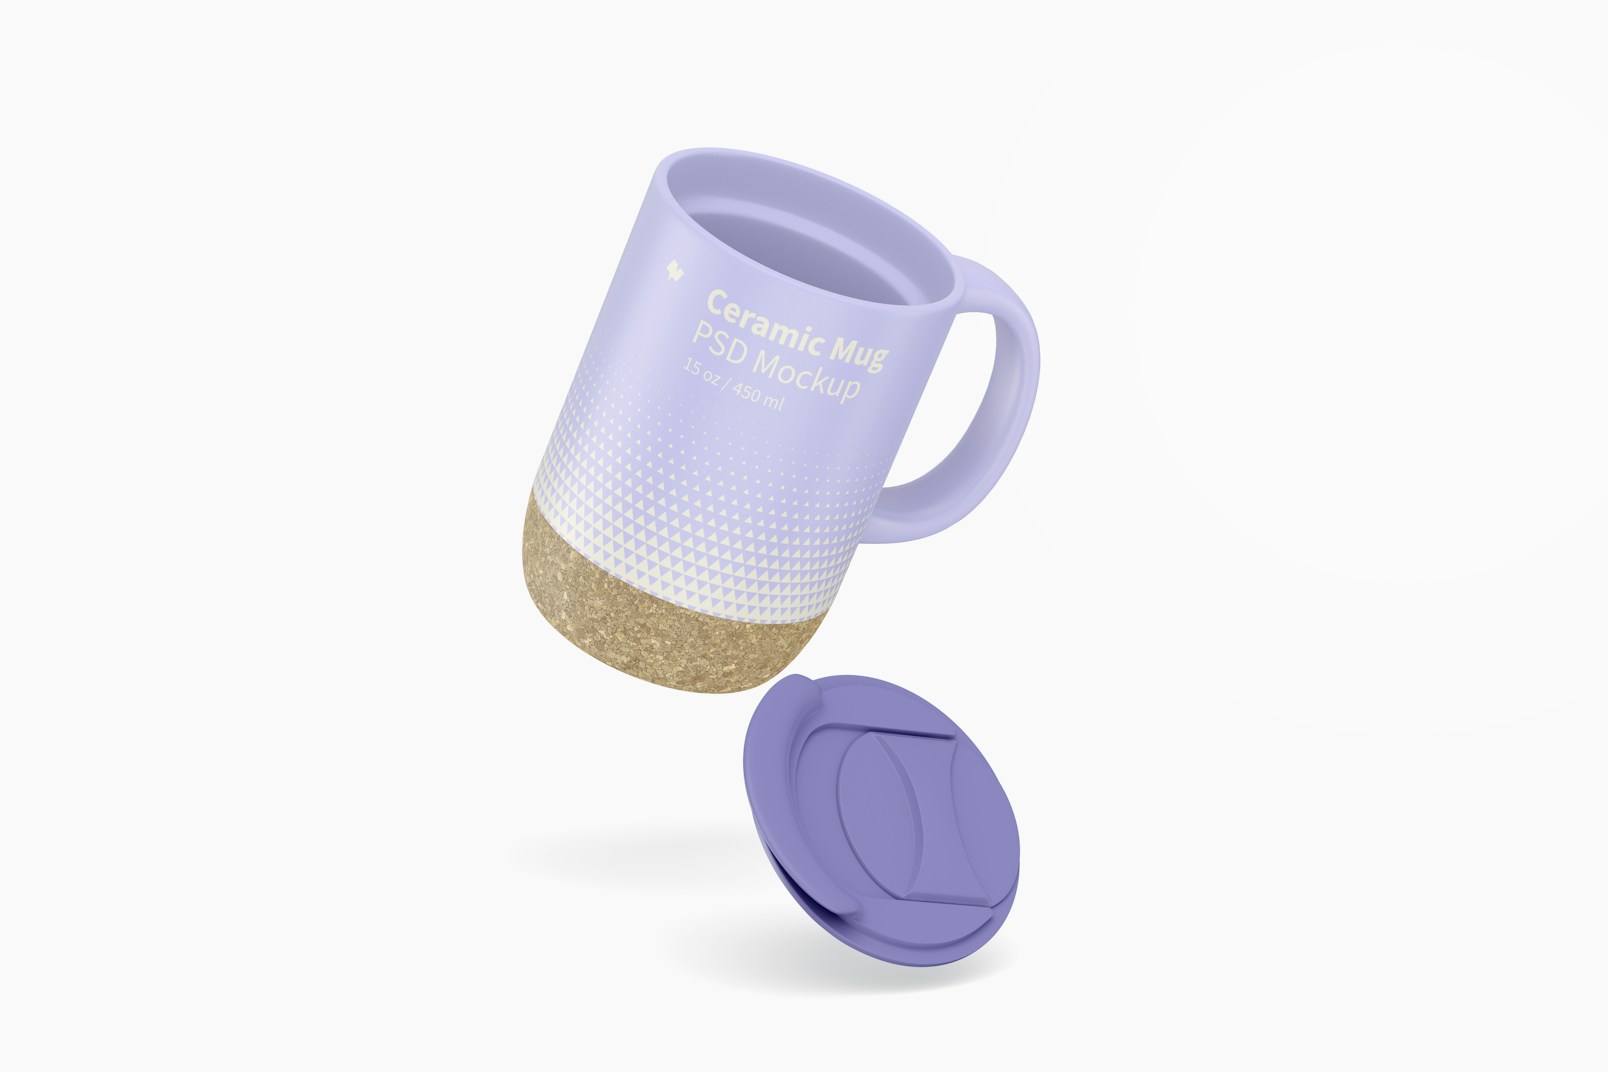 15 oz Ceramic Mug with Lid Mockup, Floating